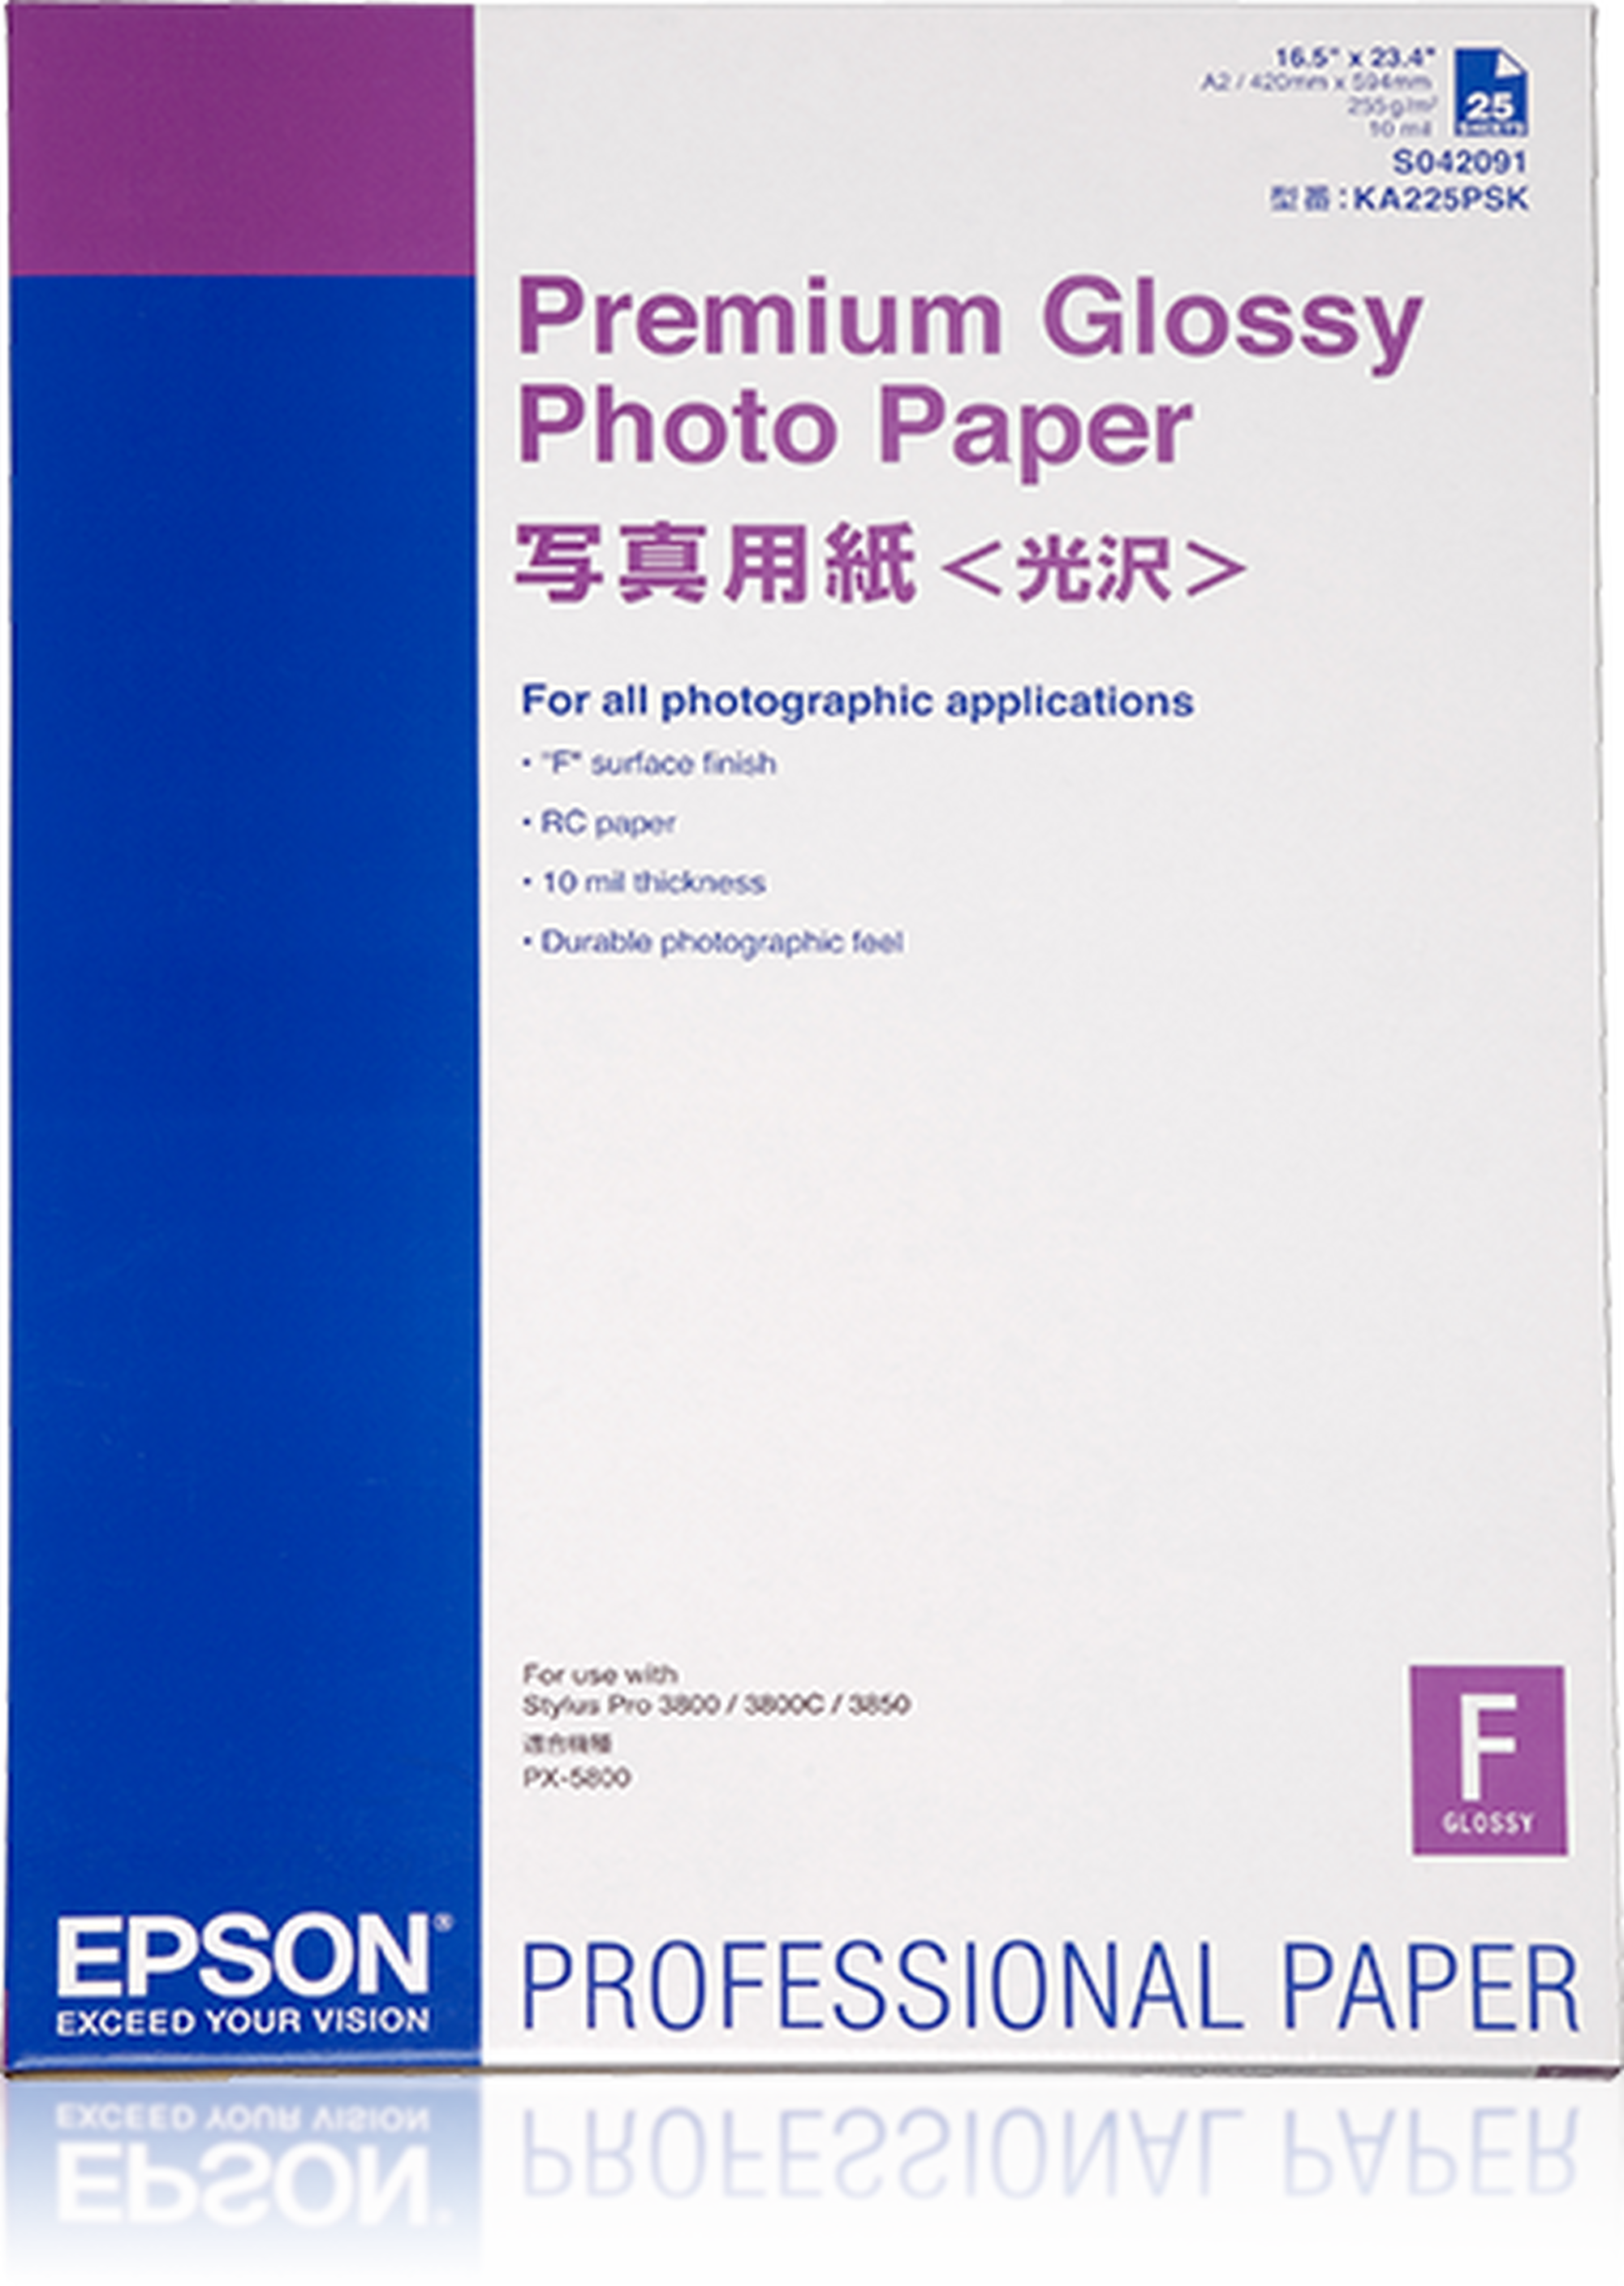 Epson Premium Glossy Photo Paper - A2, 255g/m² - 25 sheets